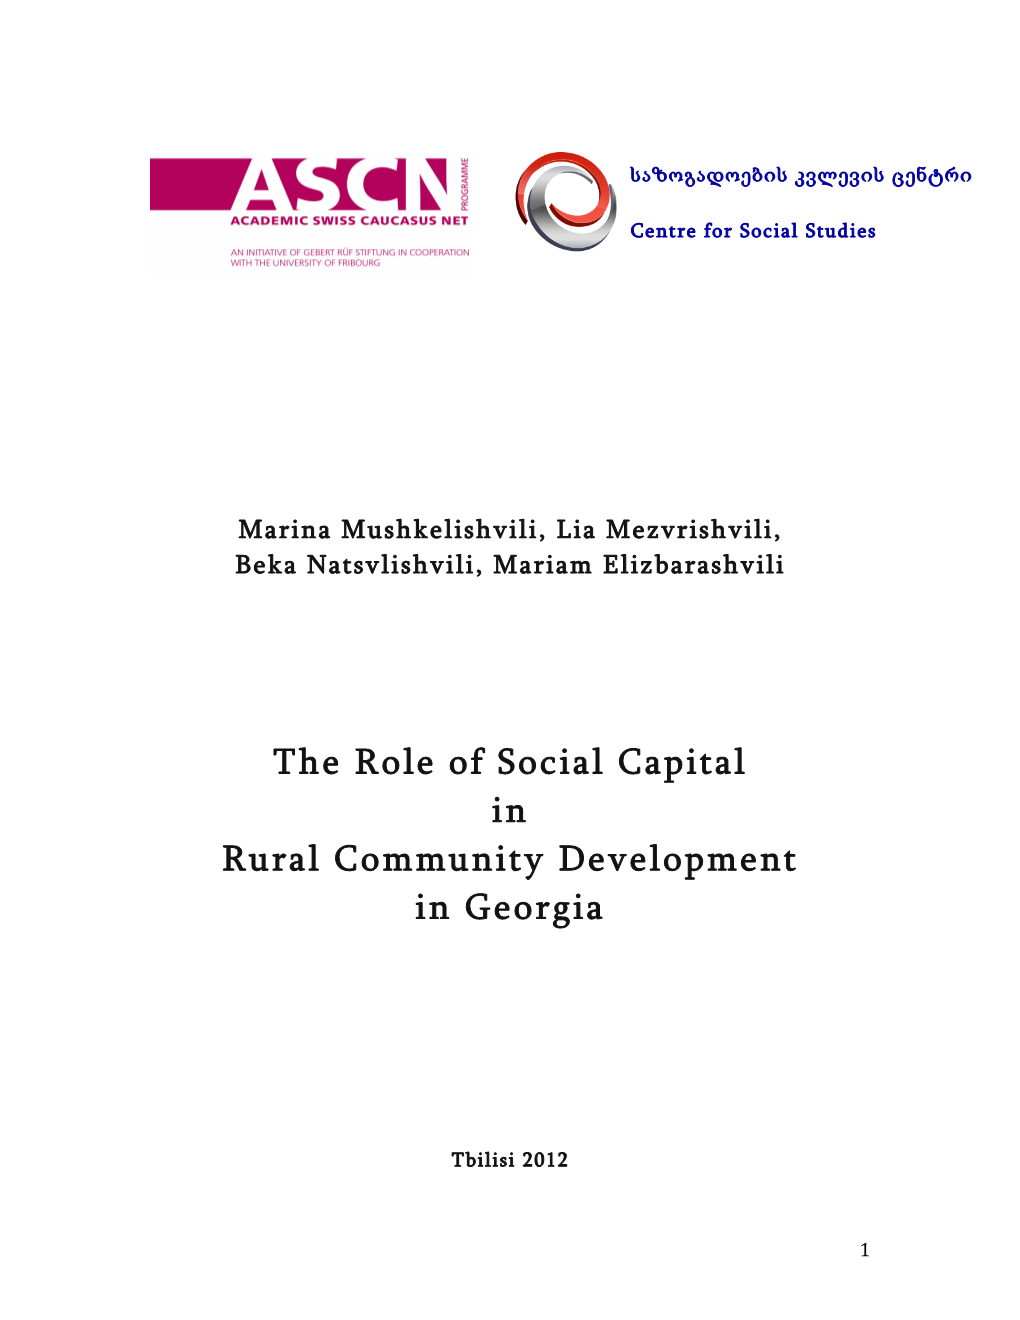 The Role of Social Capital in Rural Community Development in Georgia